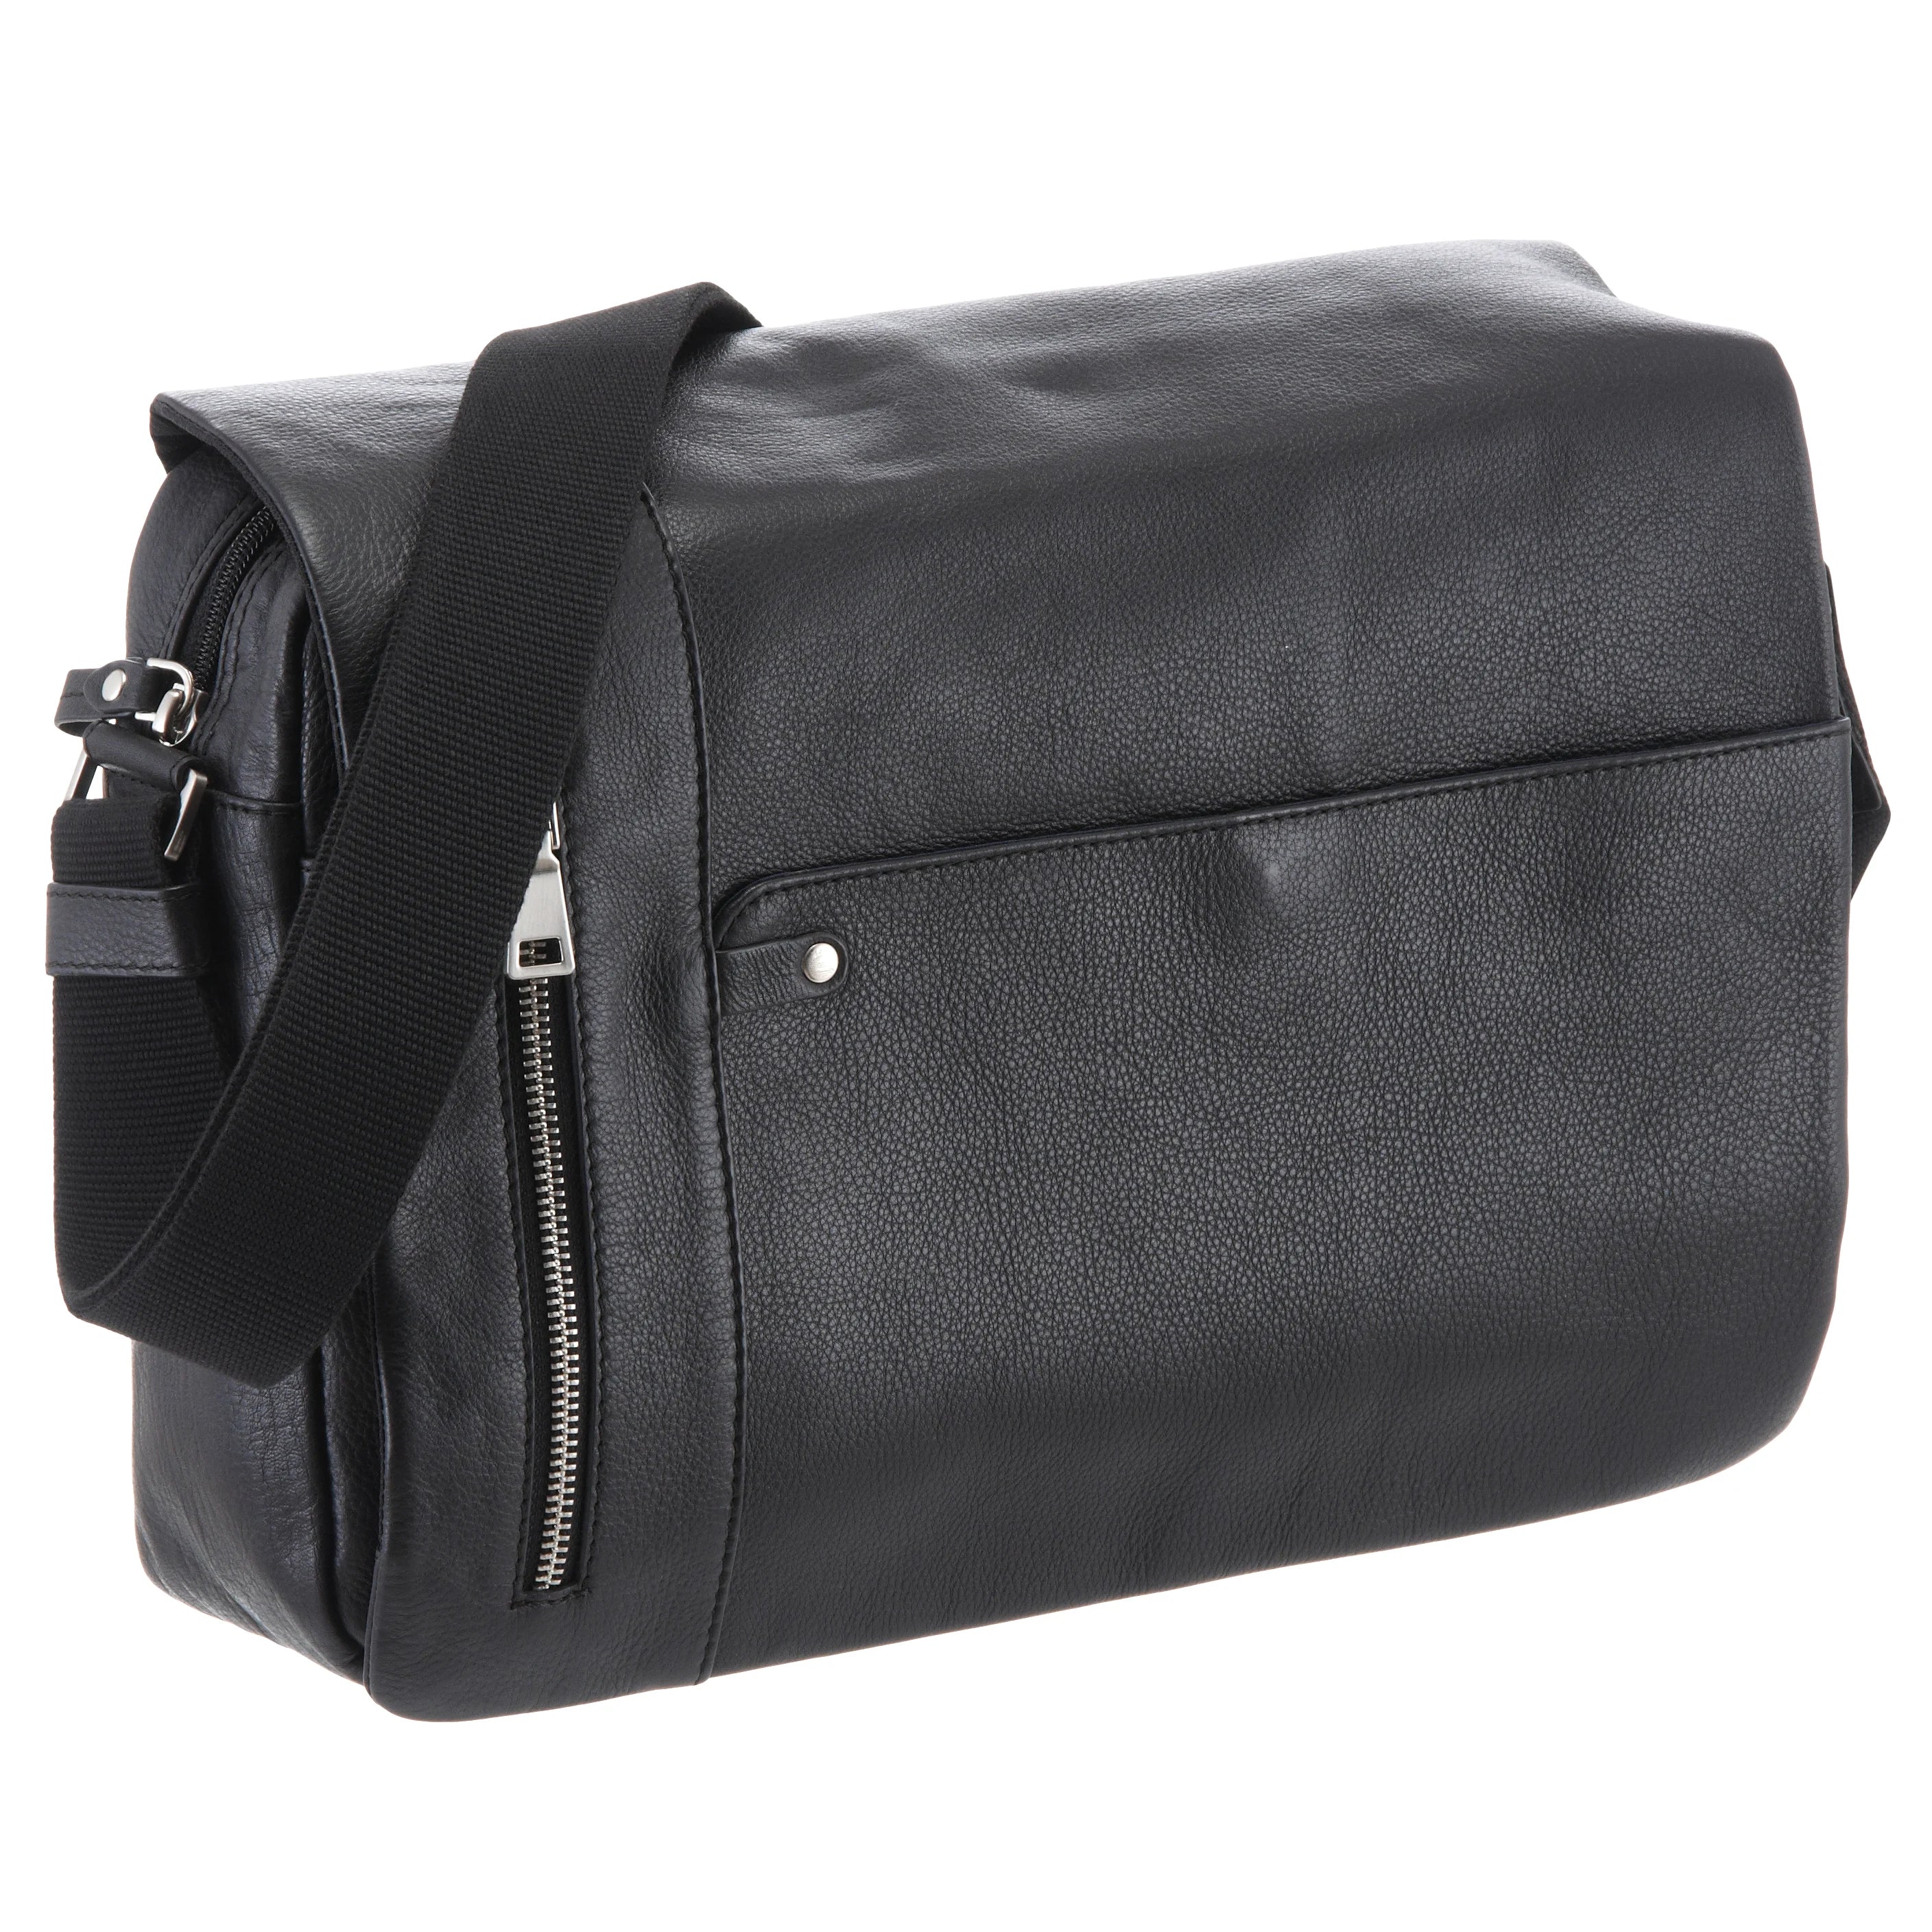 Esquire Sydney Messenger Bag 35 cm - black